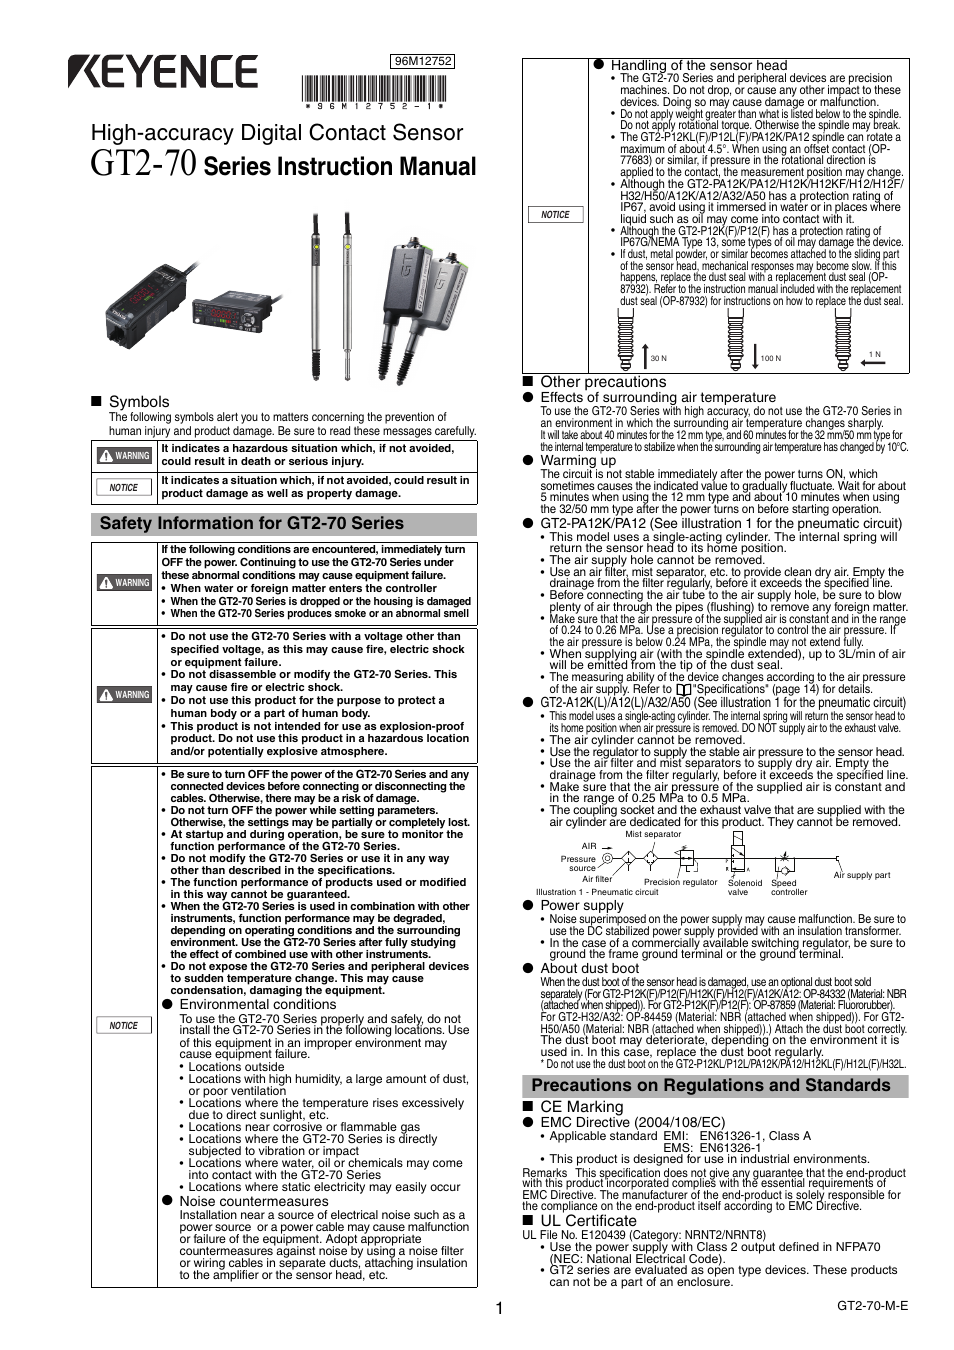 KEYENCE GT2-70 Series User Manual | 16 pages | Original mode